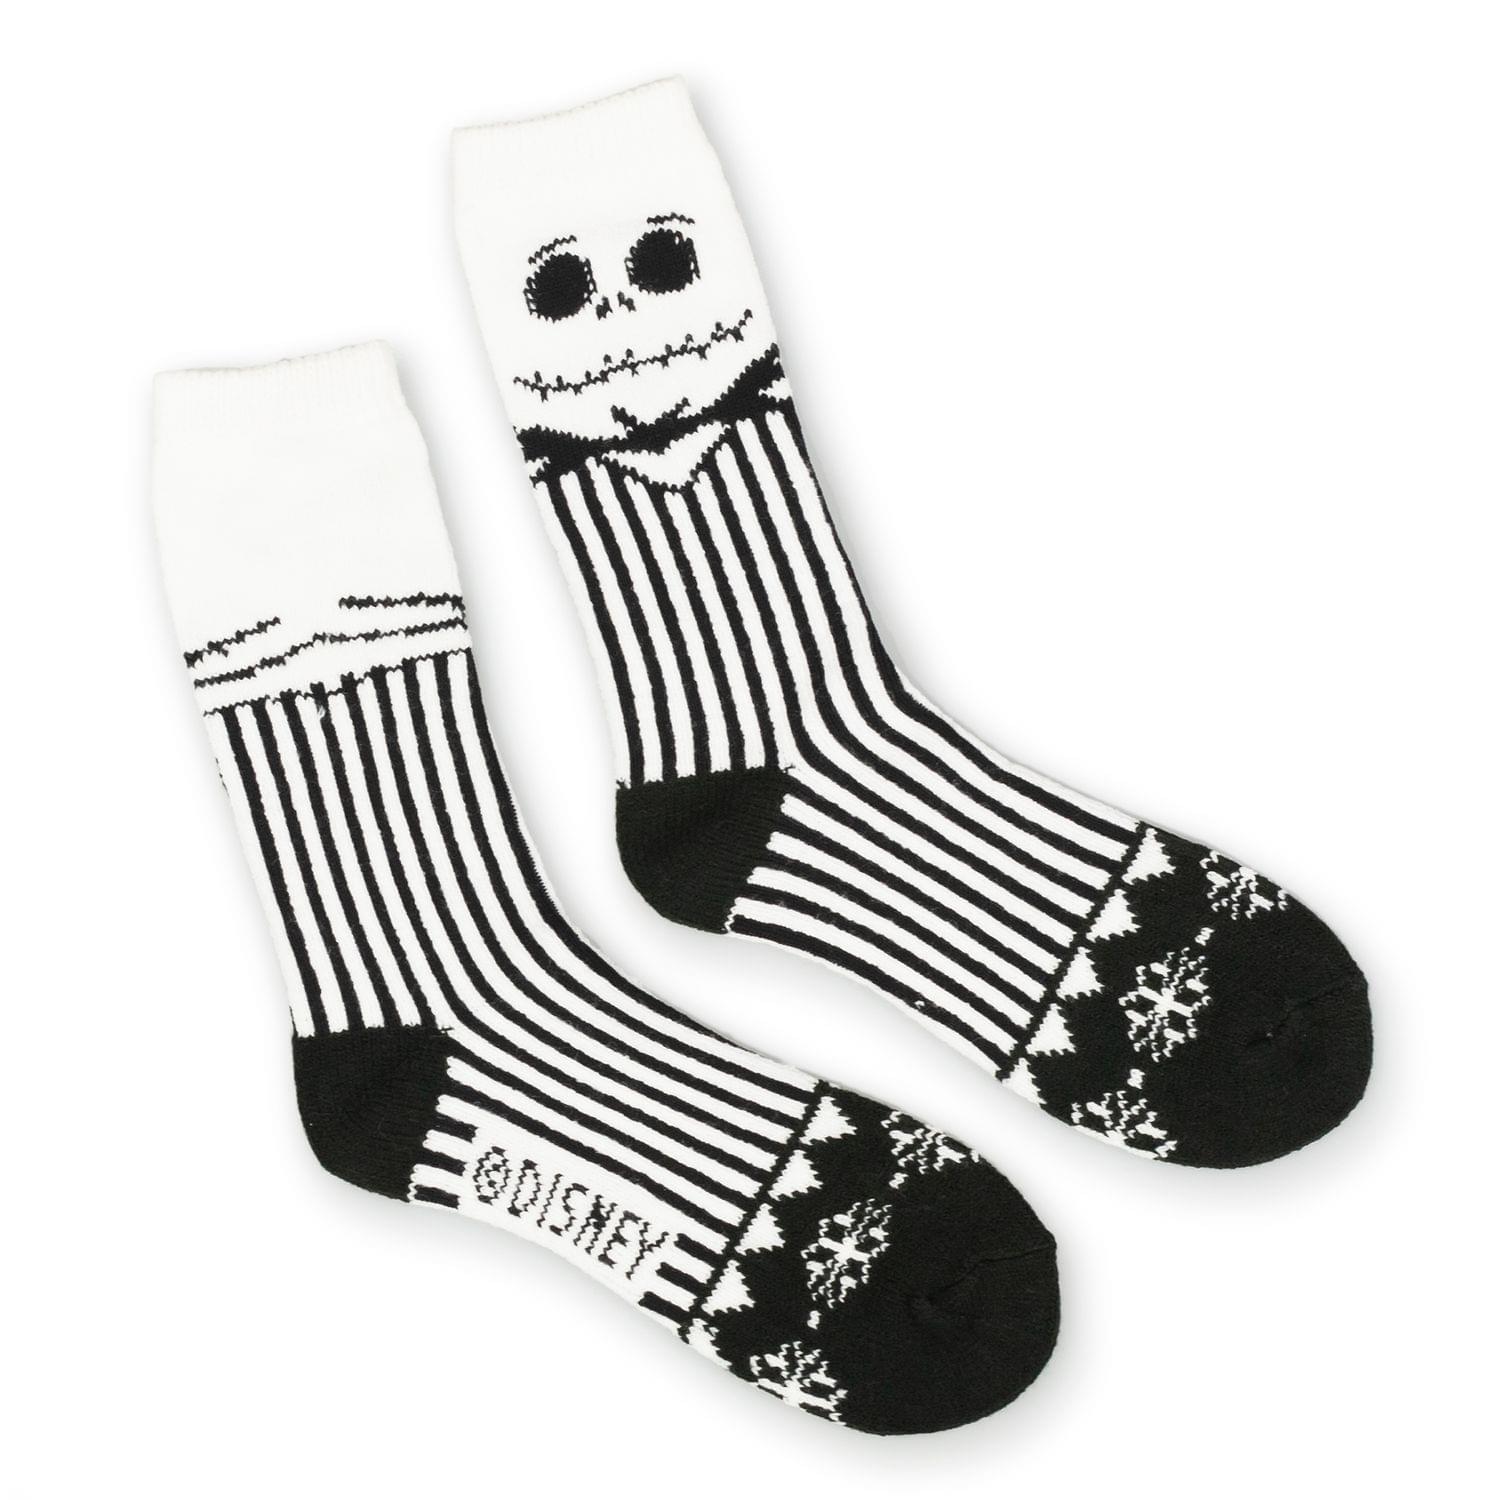 Jack Skellington Nightmare Before Christmas Striped Sweater Socks size 10-13